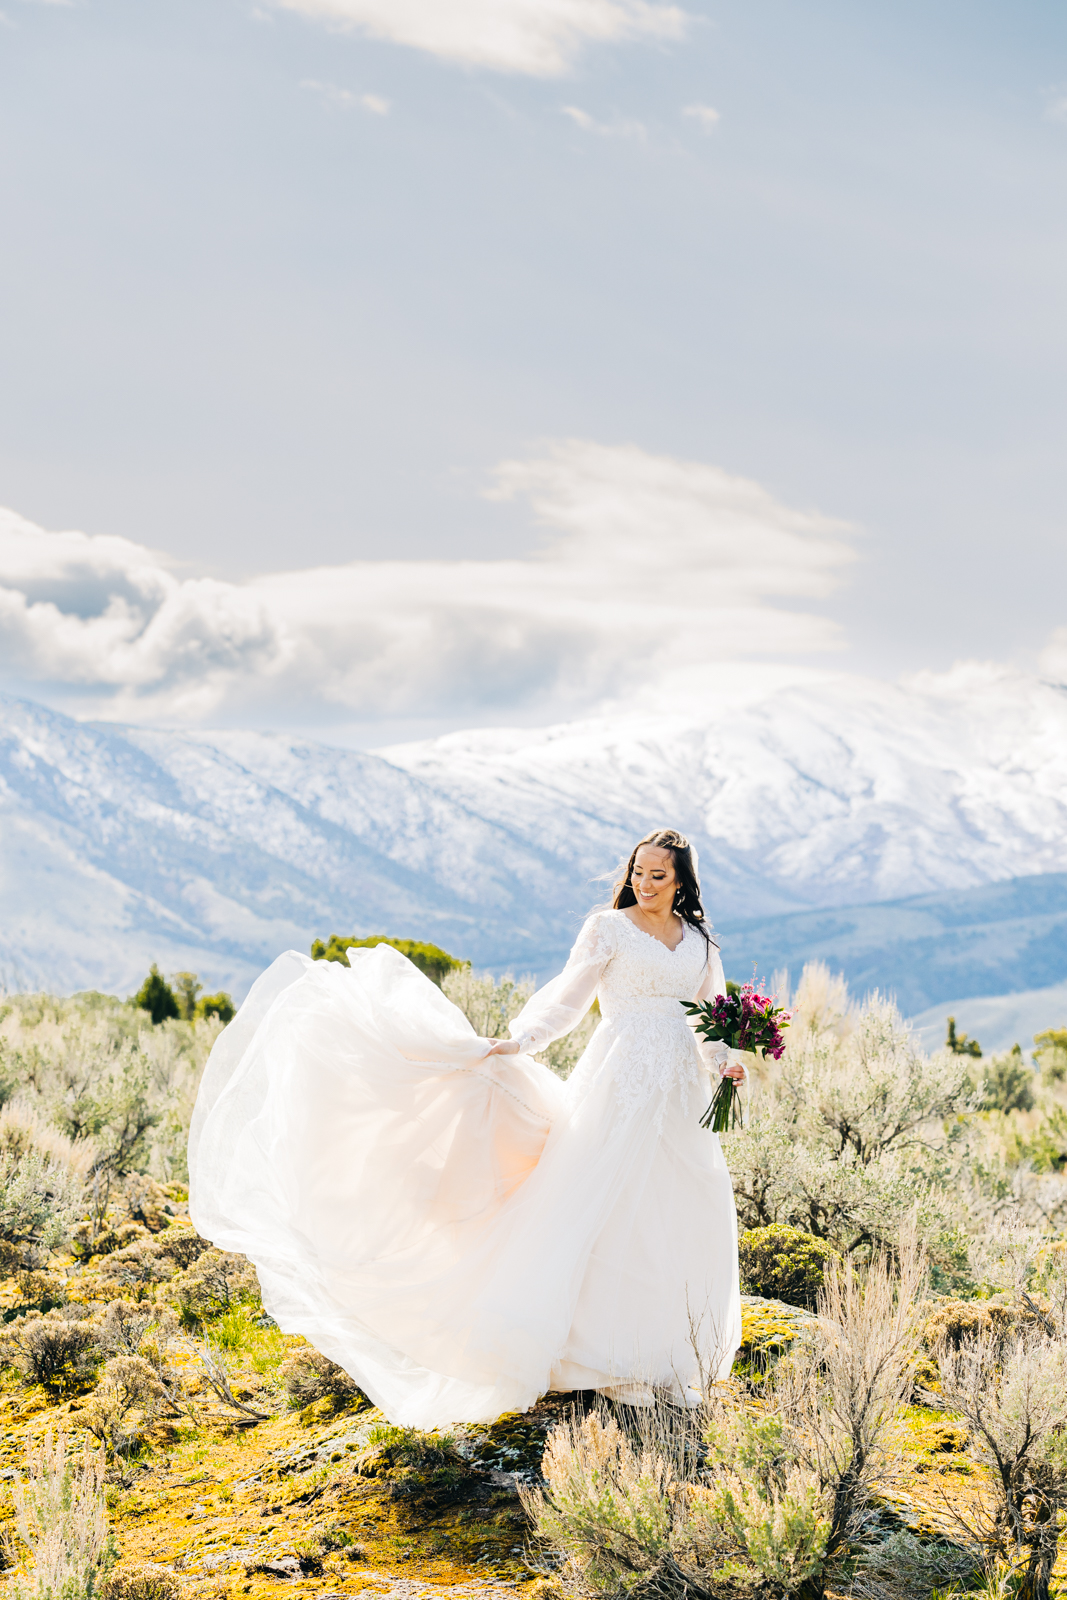 Jackson Hole wedding photographer capturesjackson hole bride in mountains with dress